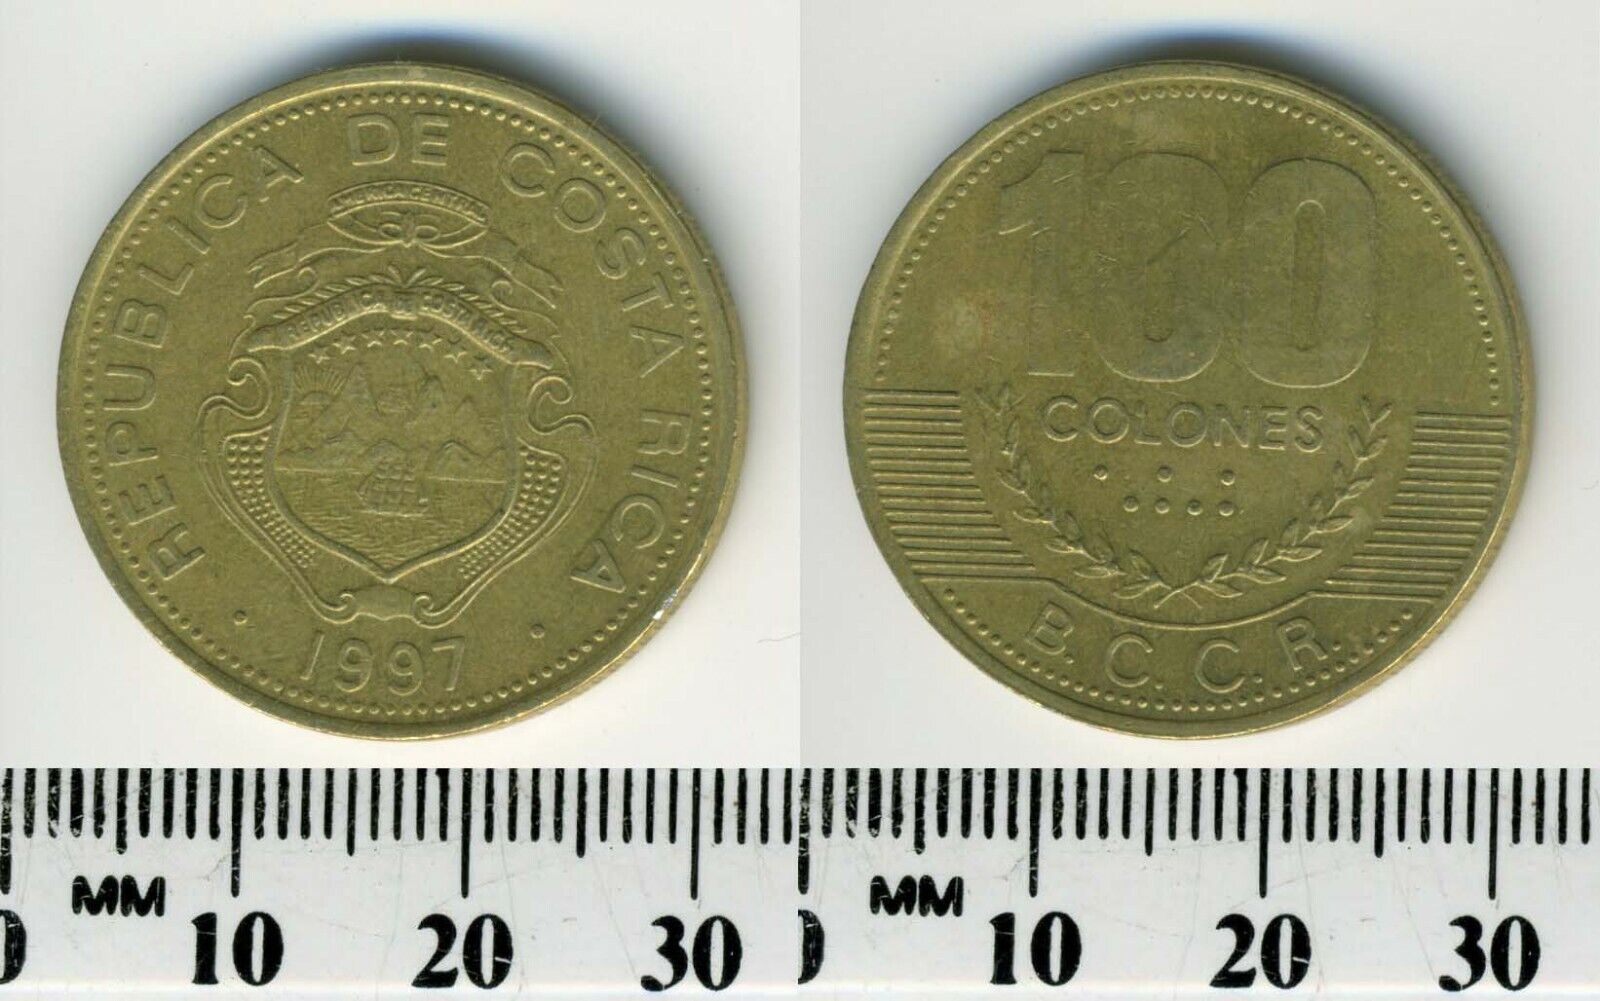 Costa Rica 1997 - 100 Colones Copper-aluminum-nickel Coin - National Arms